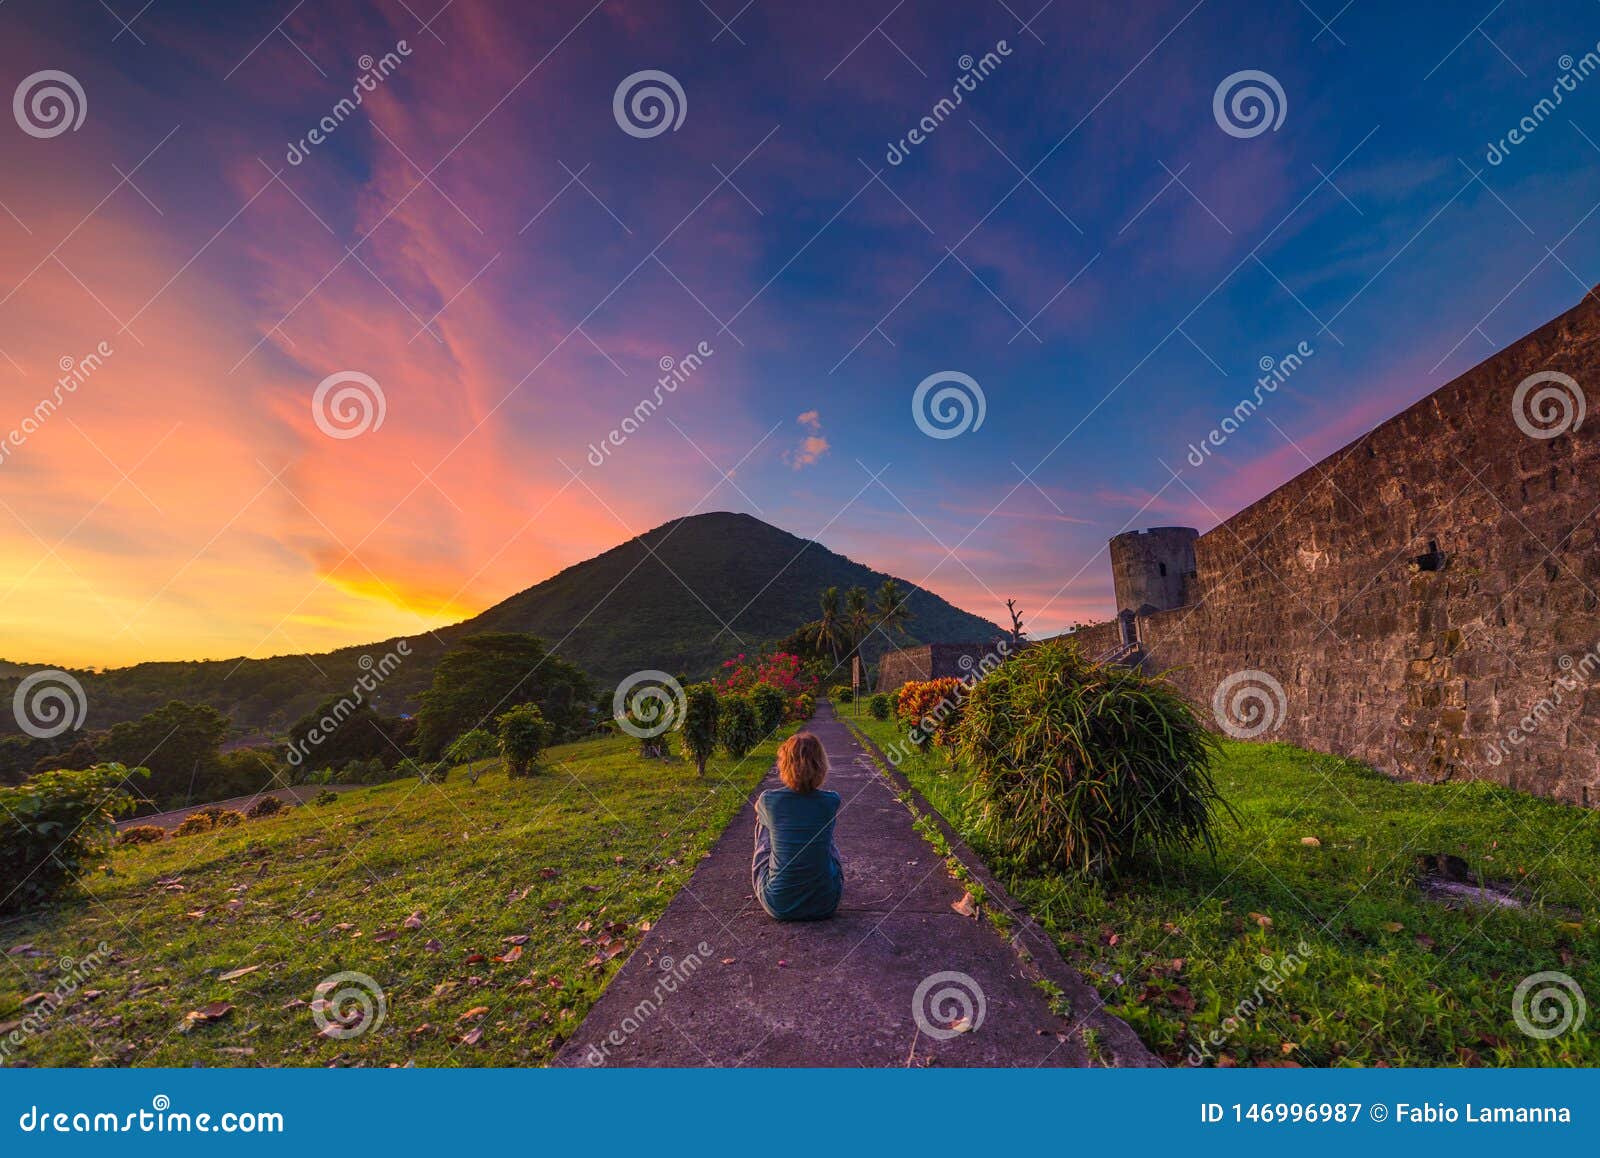 api volcano at sunset, sitting woman looking at view from banda naira fort, maluku moluccas indonesia, top travel tourist